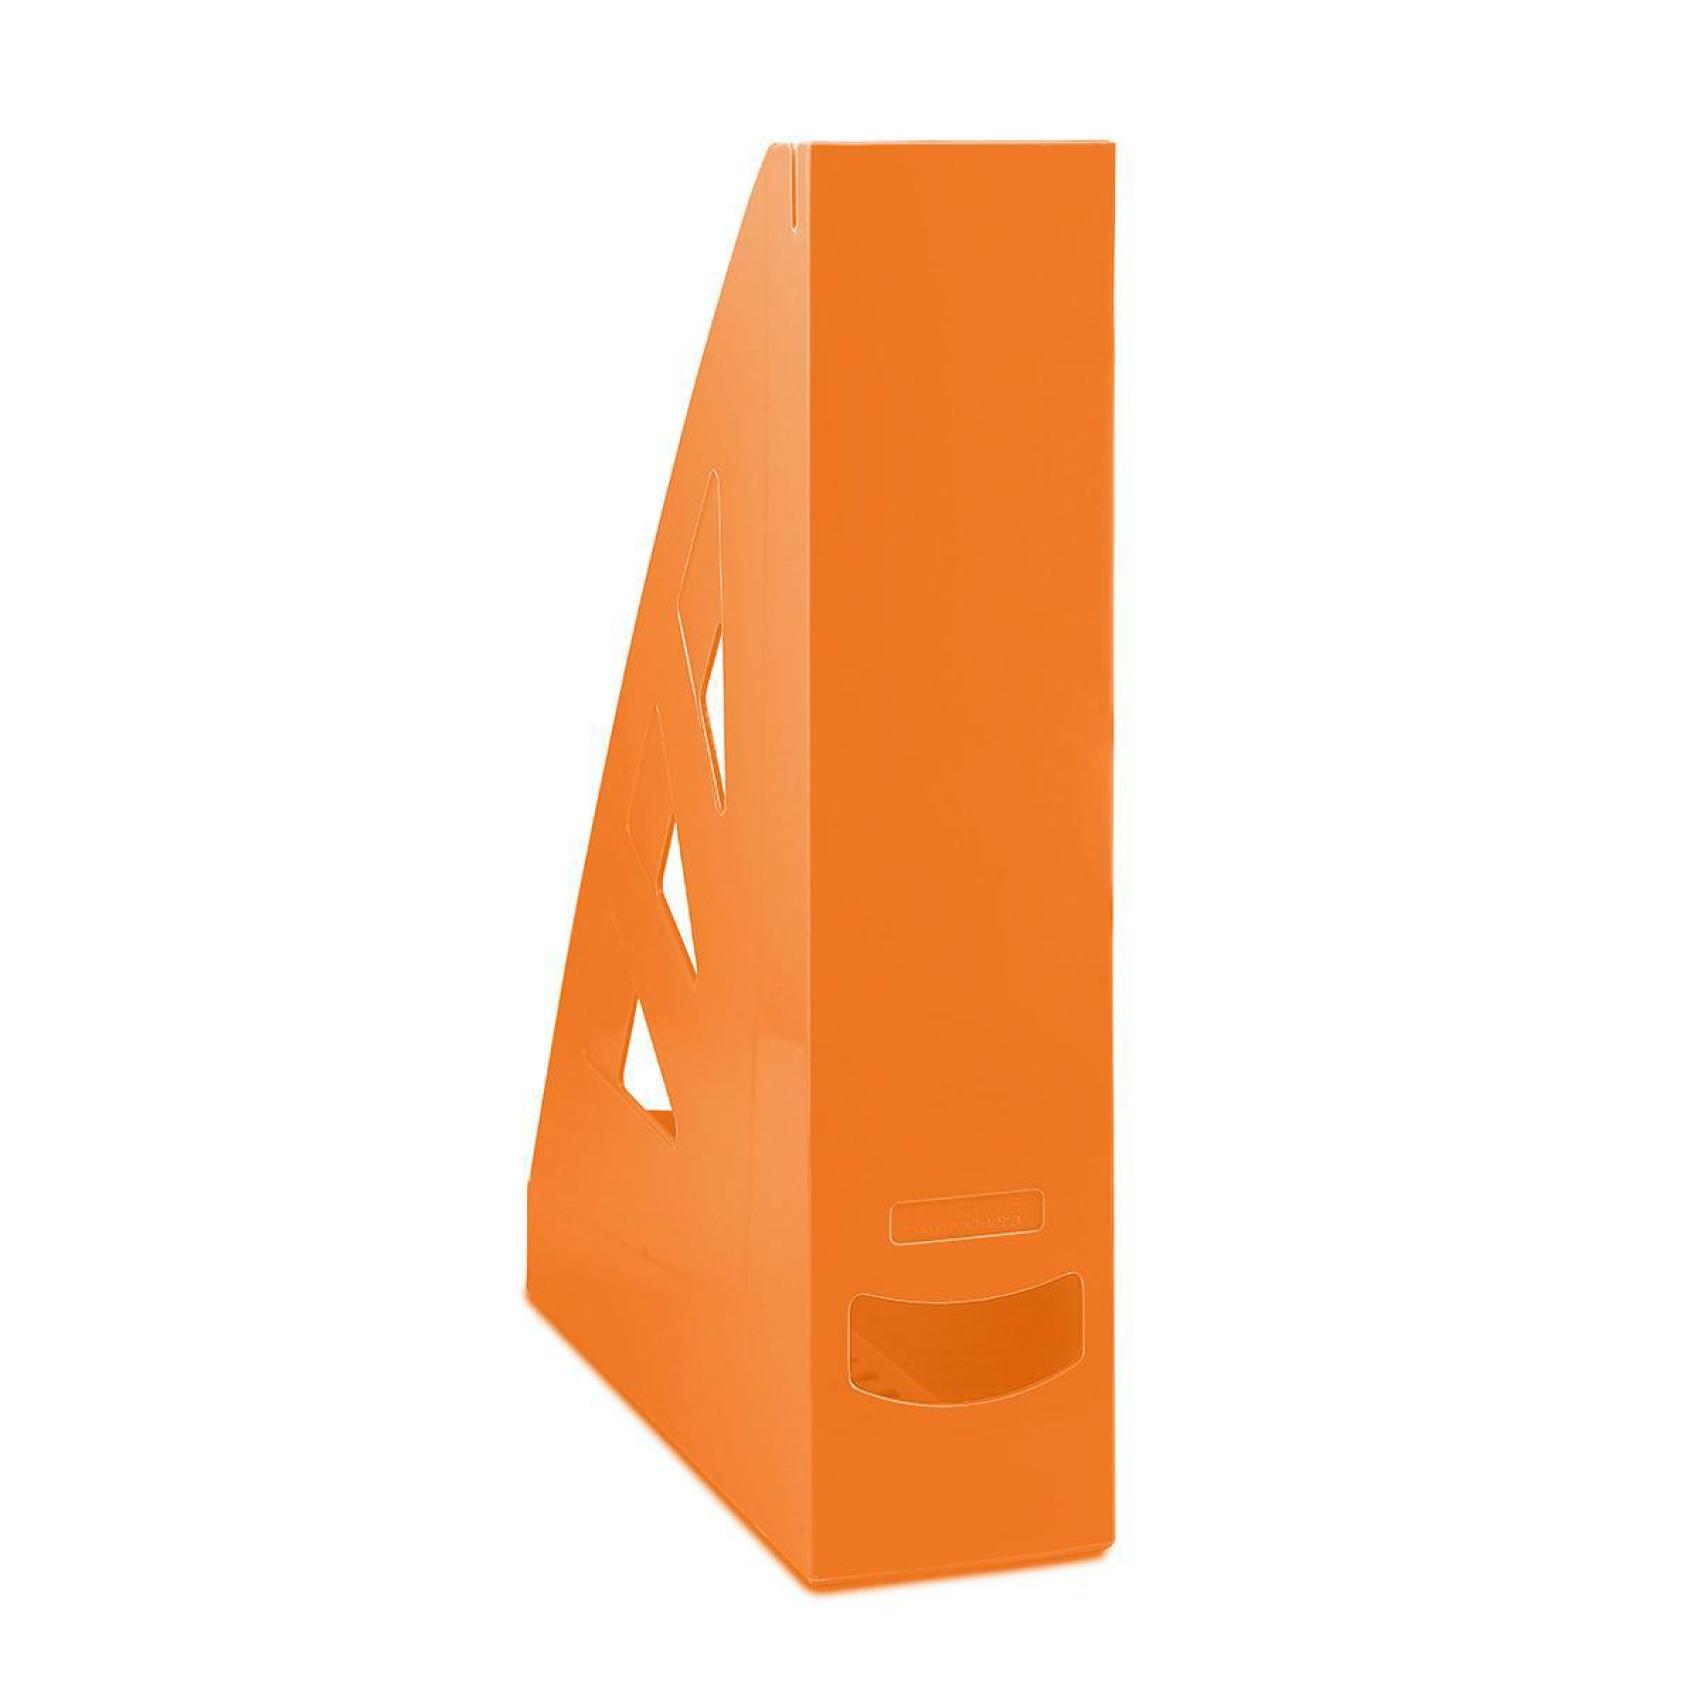 Stojan na asopisy OFFICE plast oranov - Kliknutm na obrzek zavete